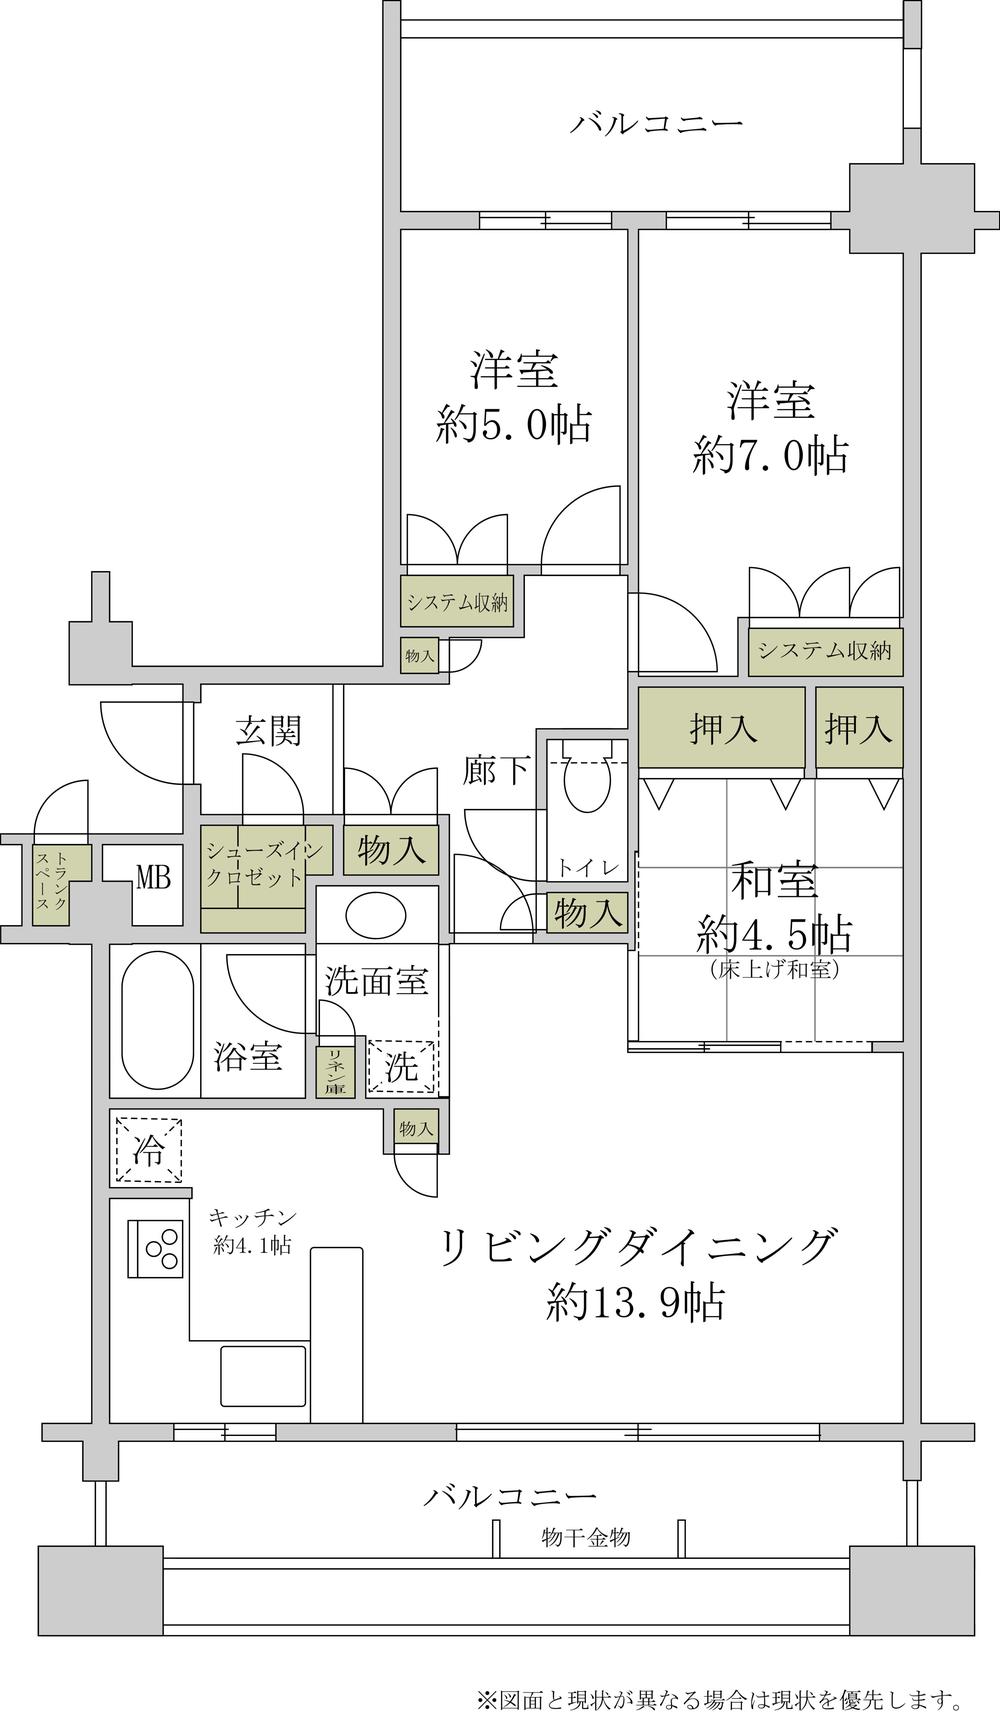 Floor plan. 3LDK, Price 30,800,000 yen, Occupied area 79.46 sq m , Balcony area 24.98 sq m spacious 79 square meters 3LDK.